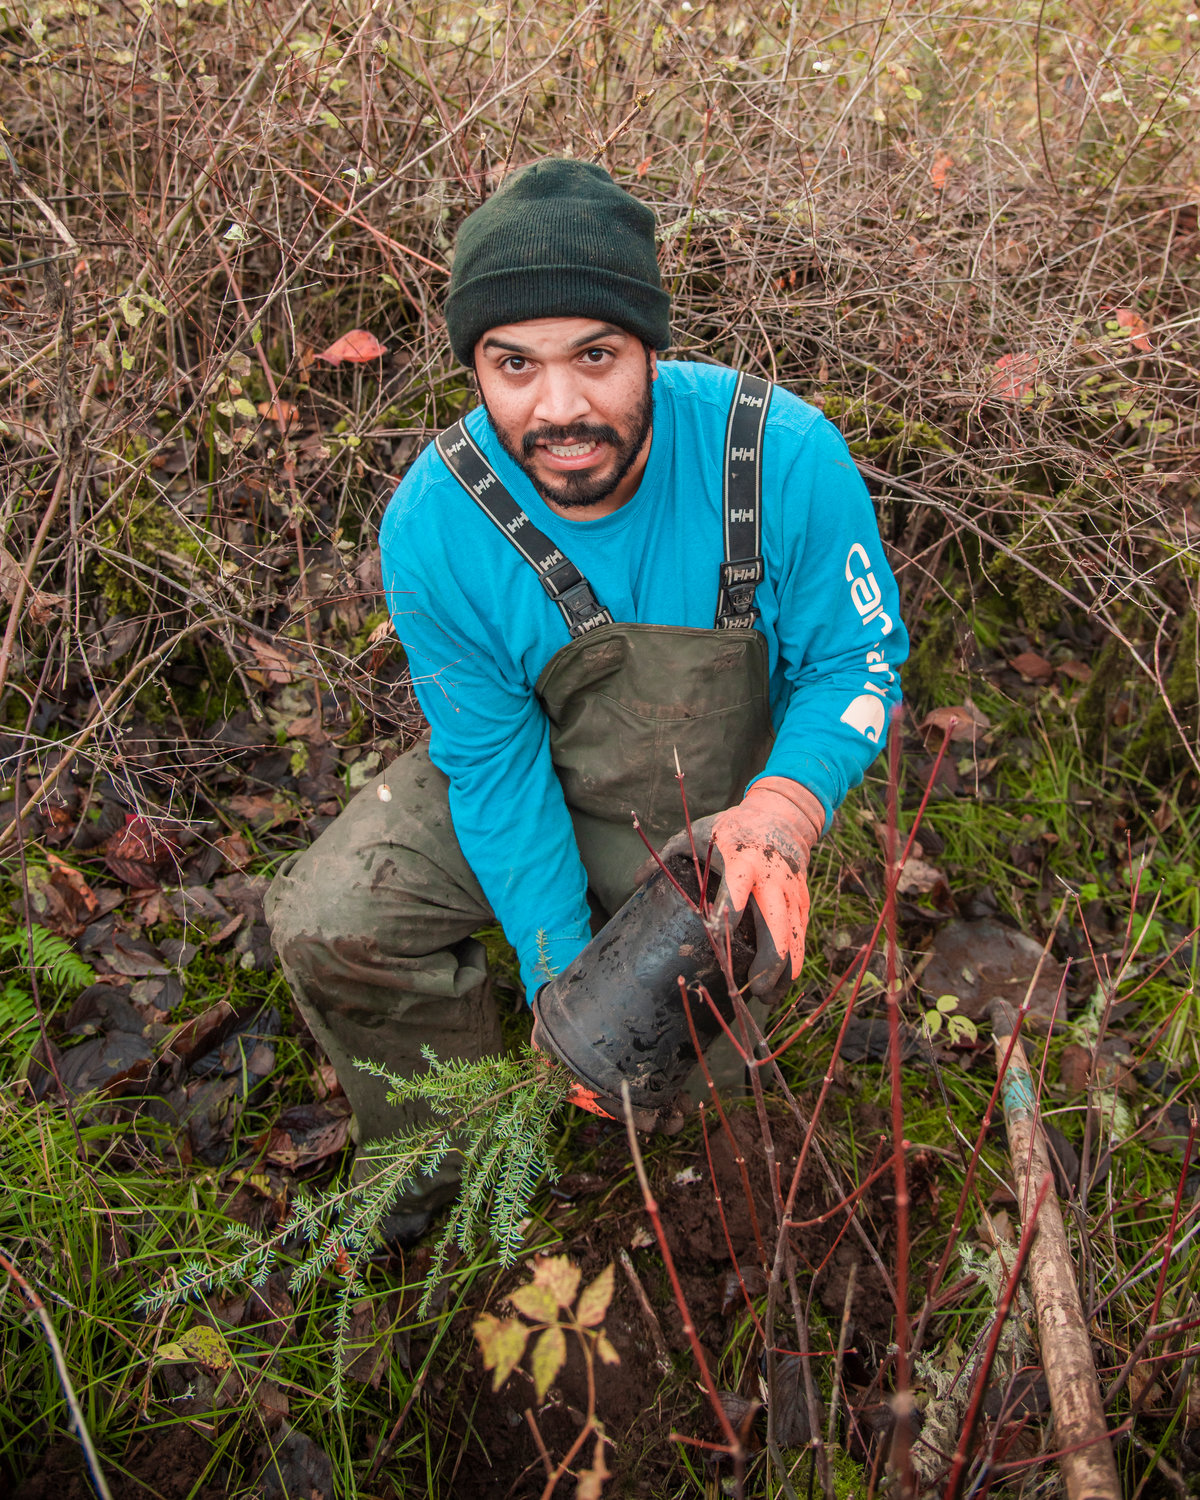 Chris Acosta depots a Western Hemlock tree sapling before planting it in Tenino Monday afternoon on a plot of land off Skookumchuck Valley Road.